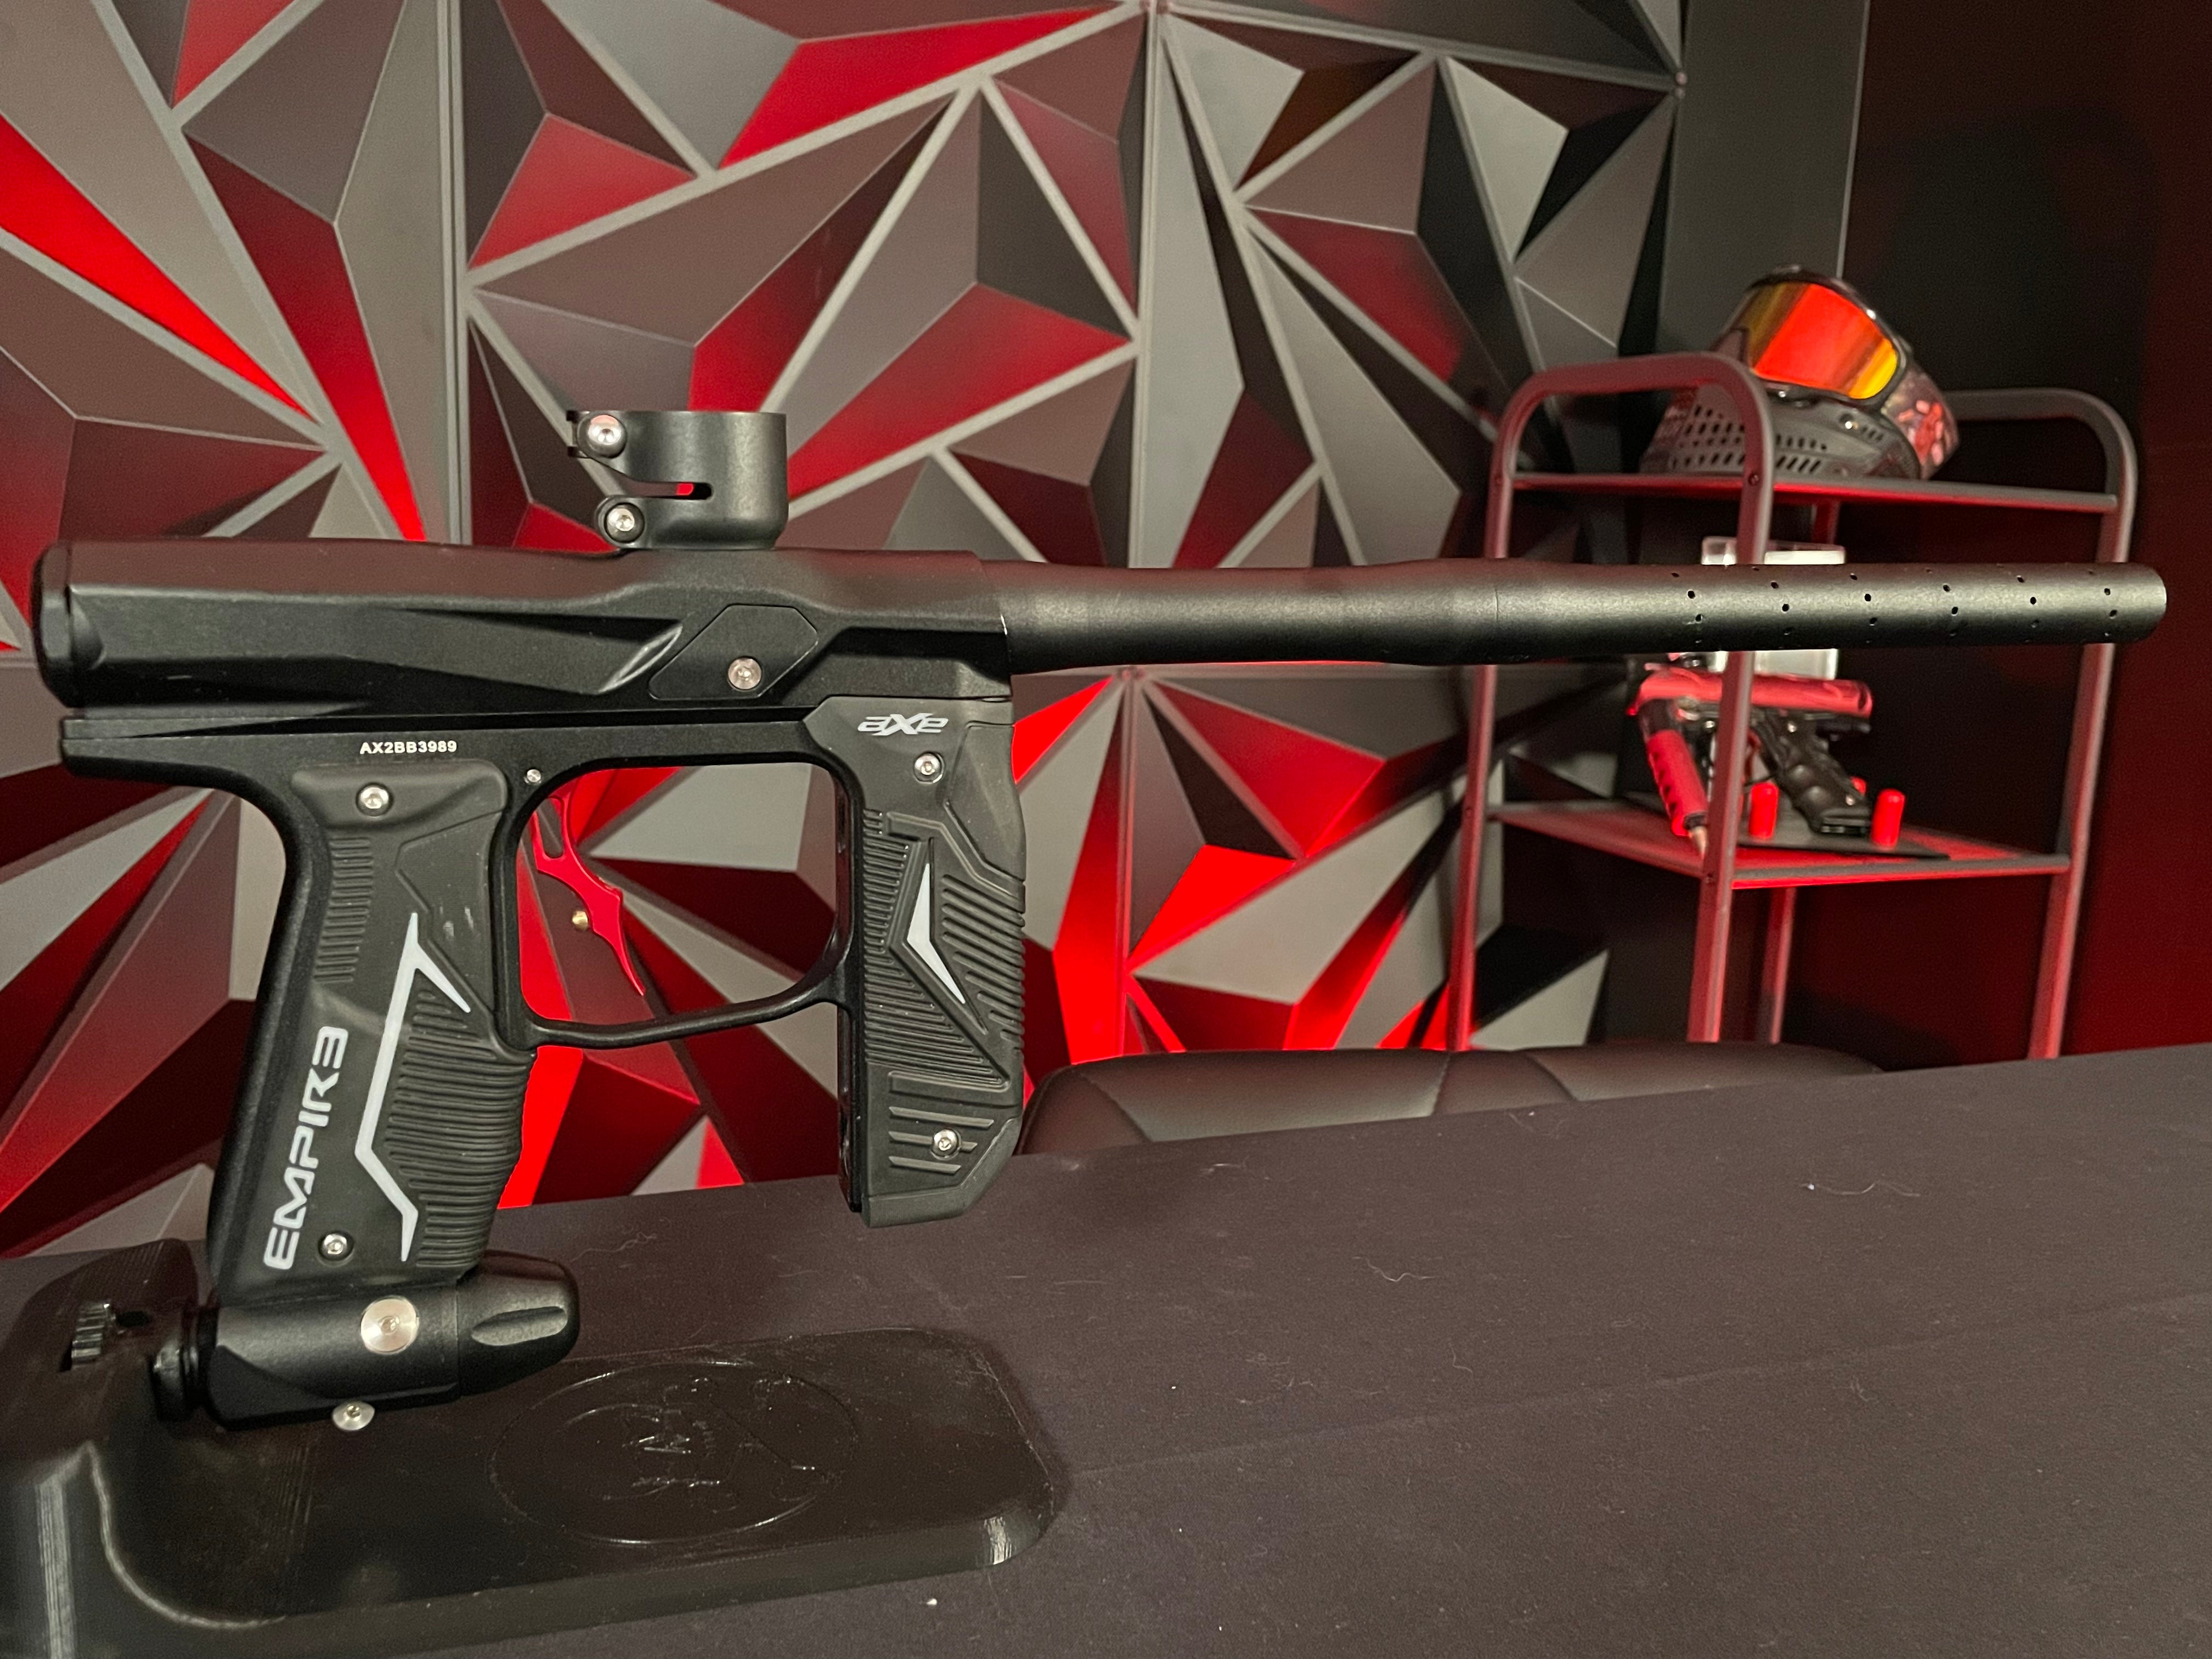 Used Empire Axe 2.0 Paintball Gun - Black w/ Redline Board & Red Deuce Trigger